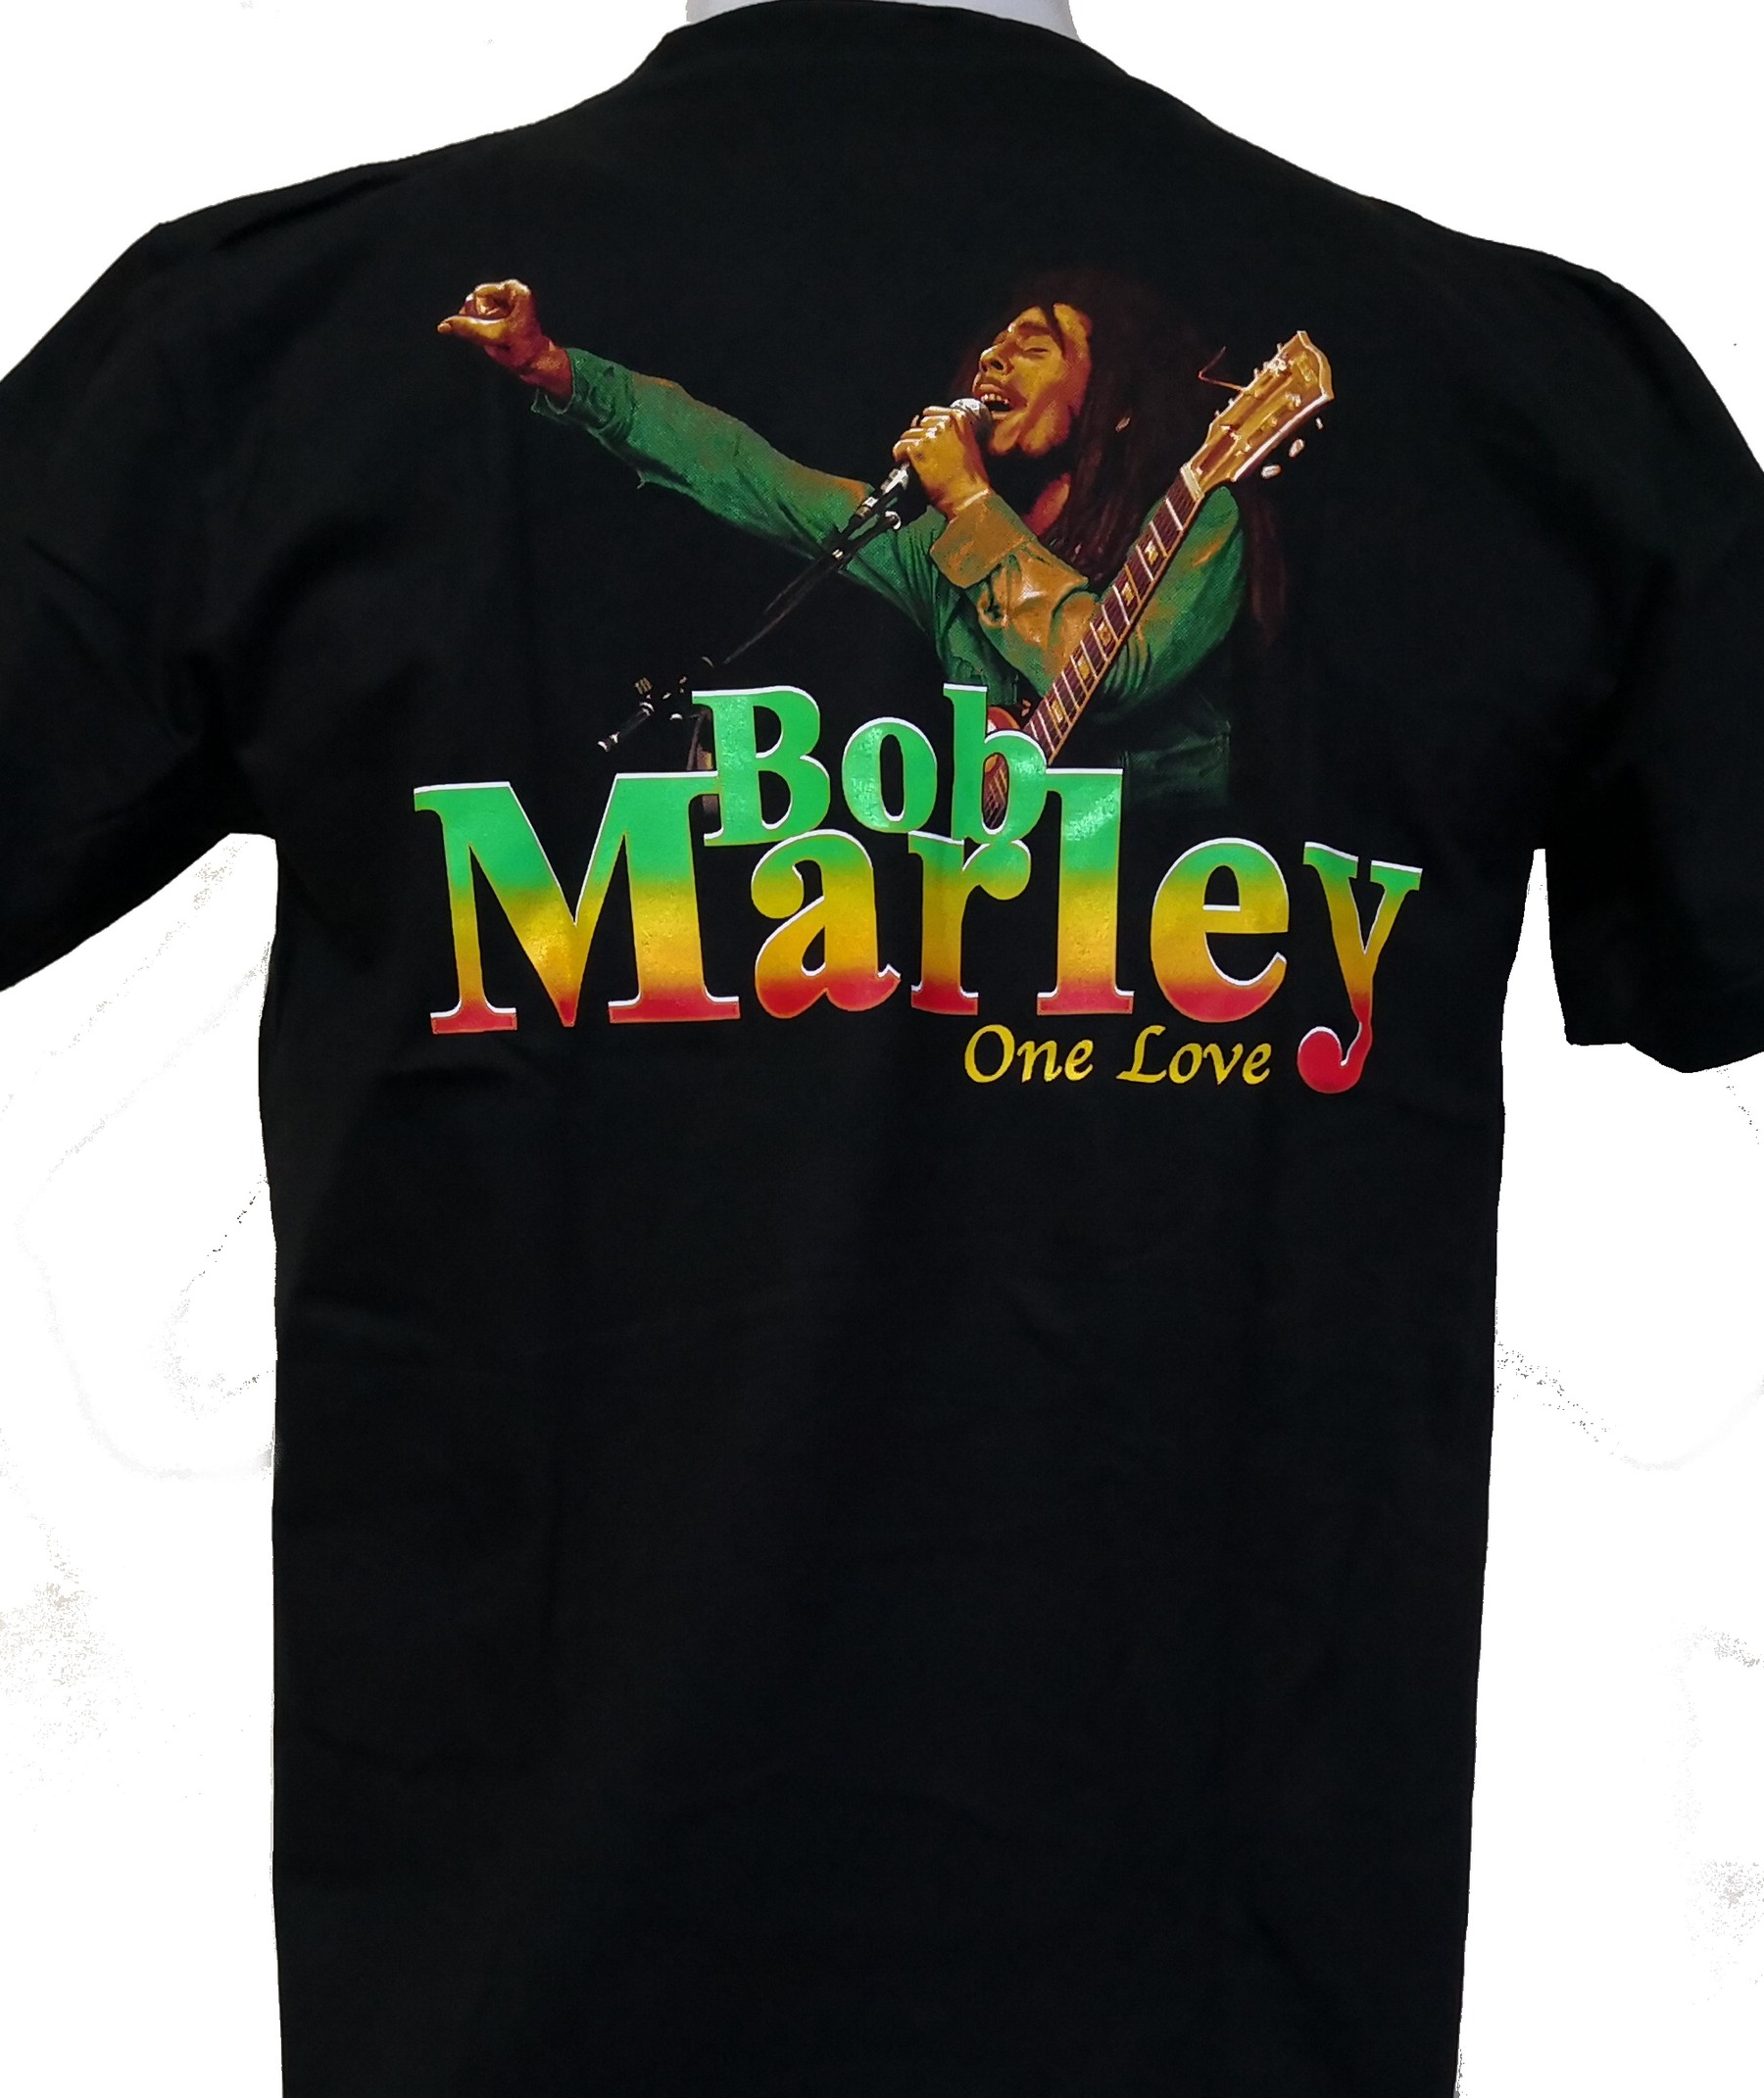 NEW One love Bob Marley Mint color black print gildan t shirt S-3XL